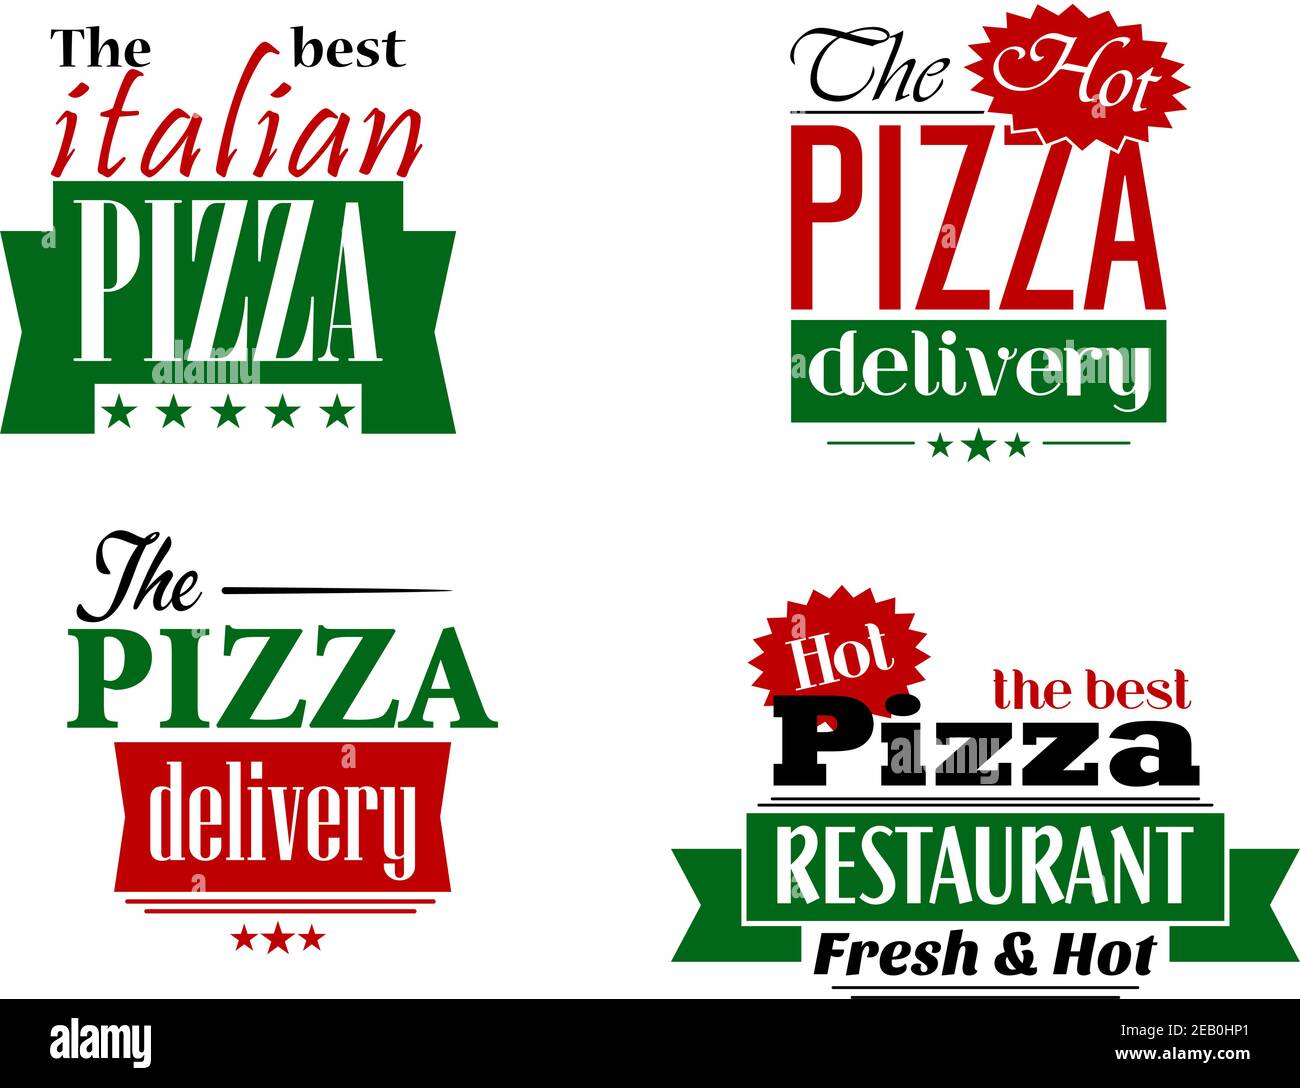 Hot, best pizza logo, label, sticker or flyer for italian pizza